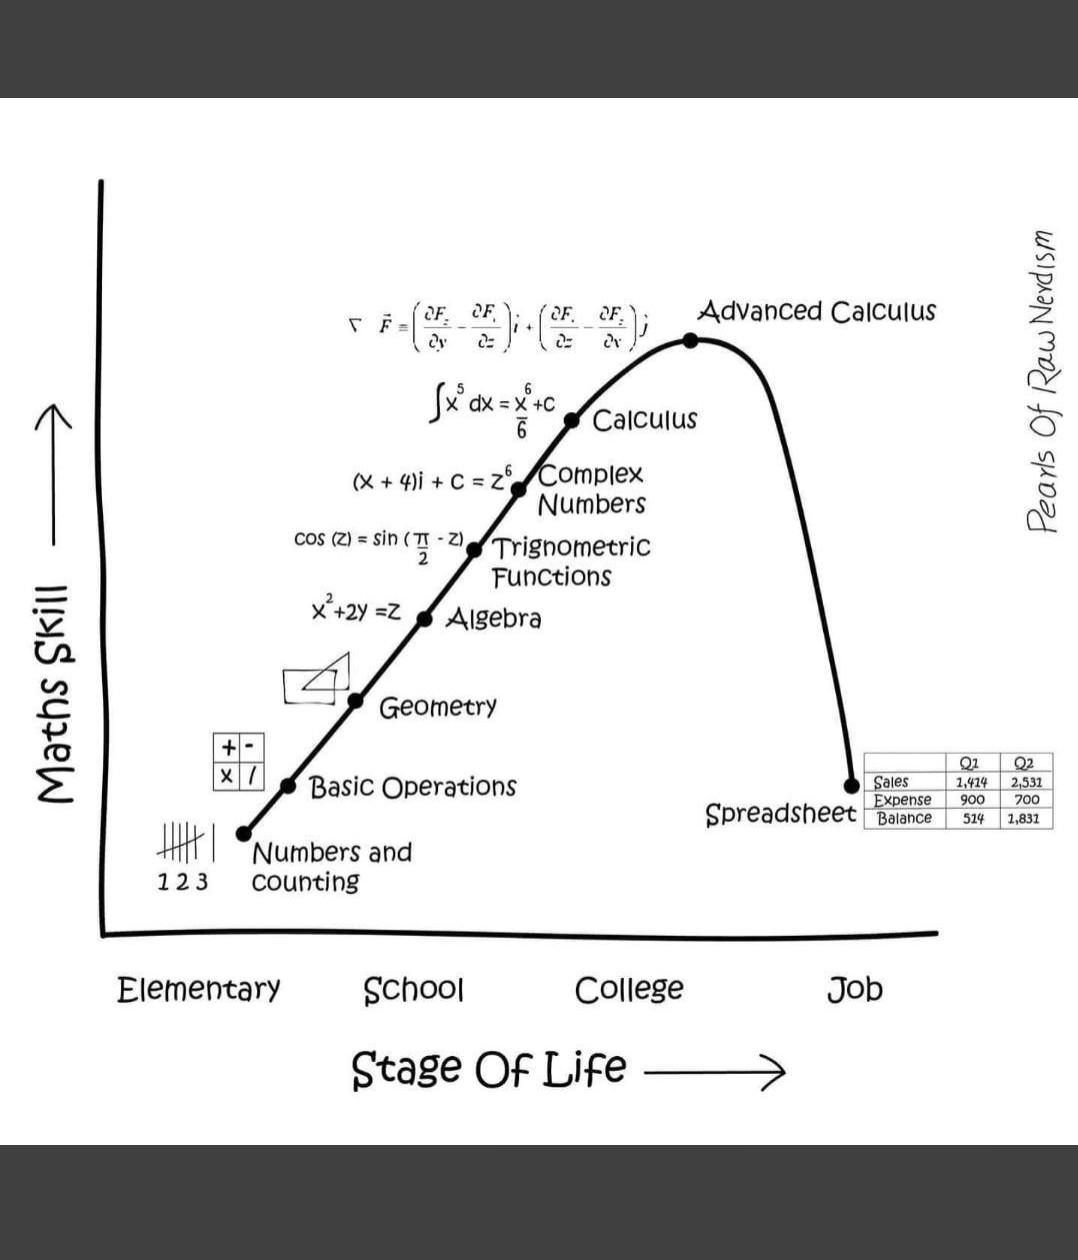 Stages of life Vs Mathematics skill